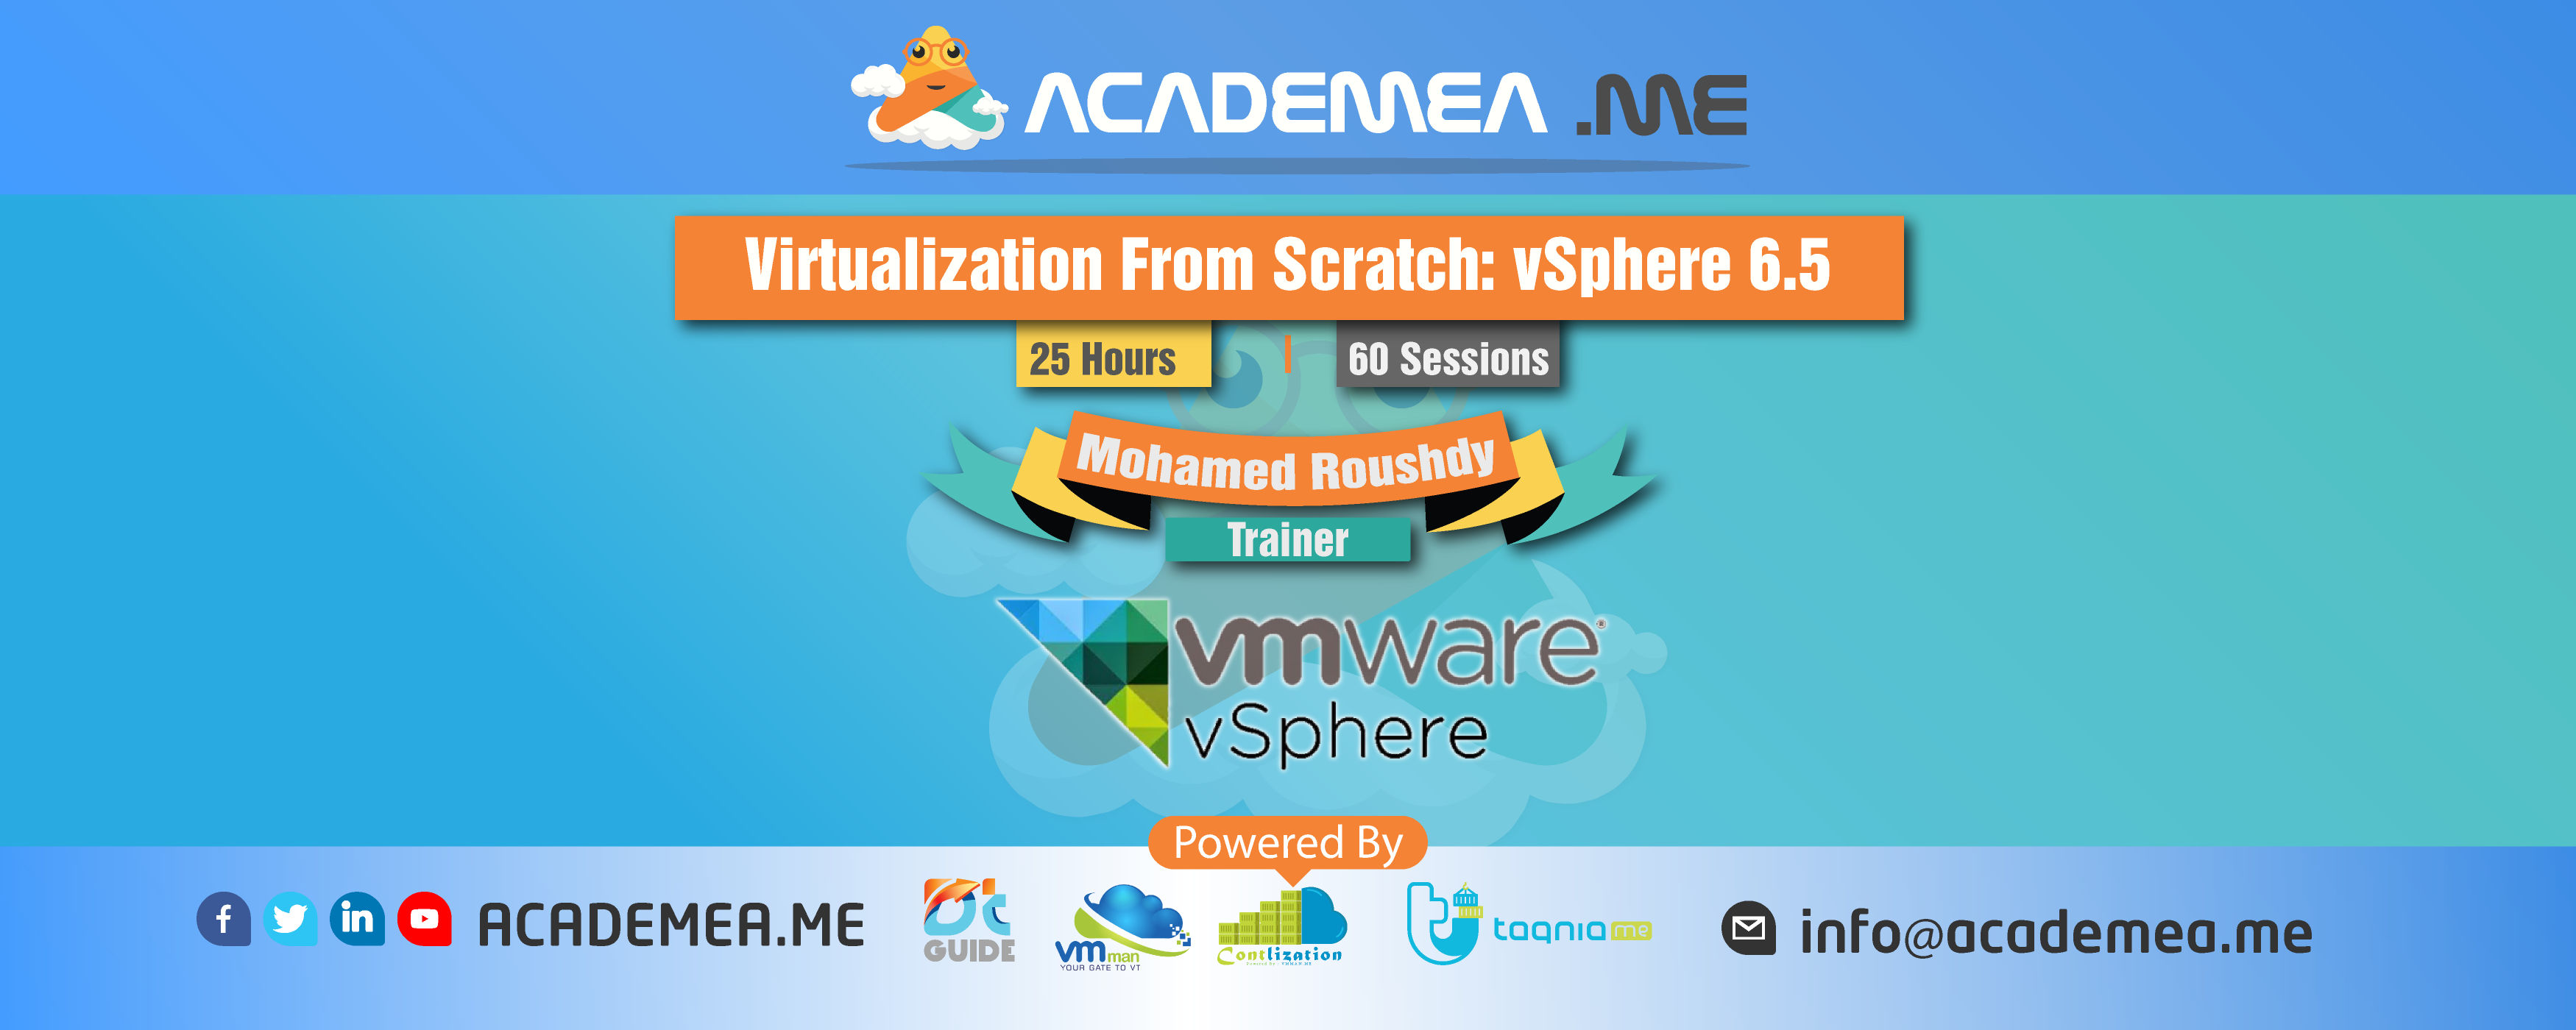 Virtualization From Scratch: vSphere 6.5